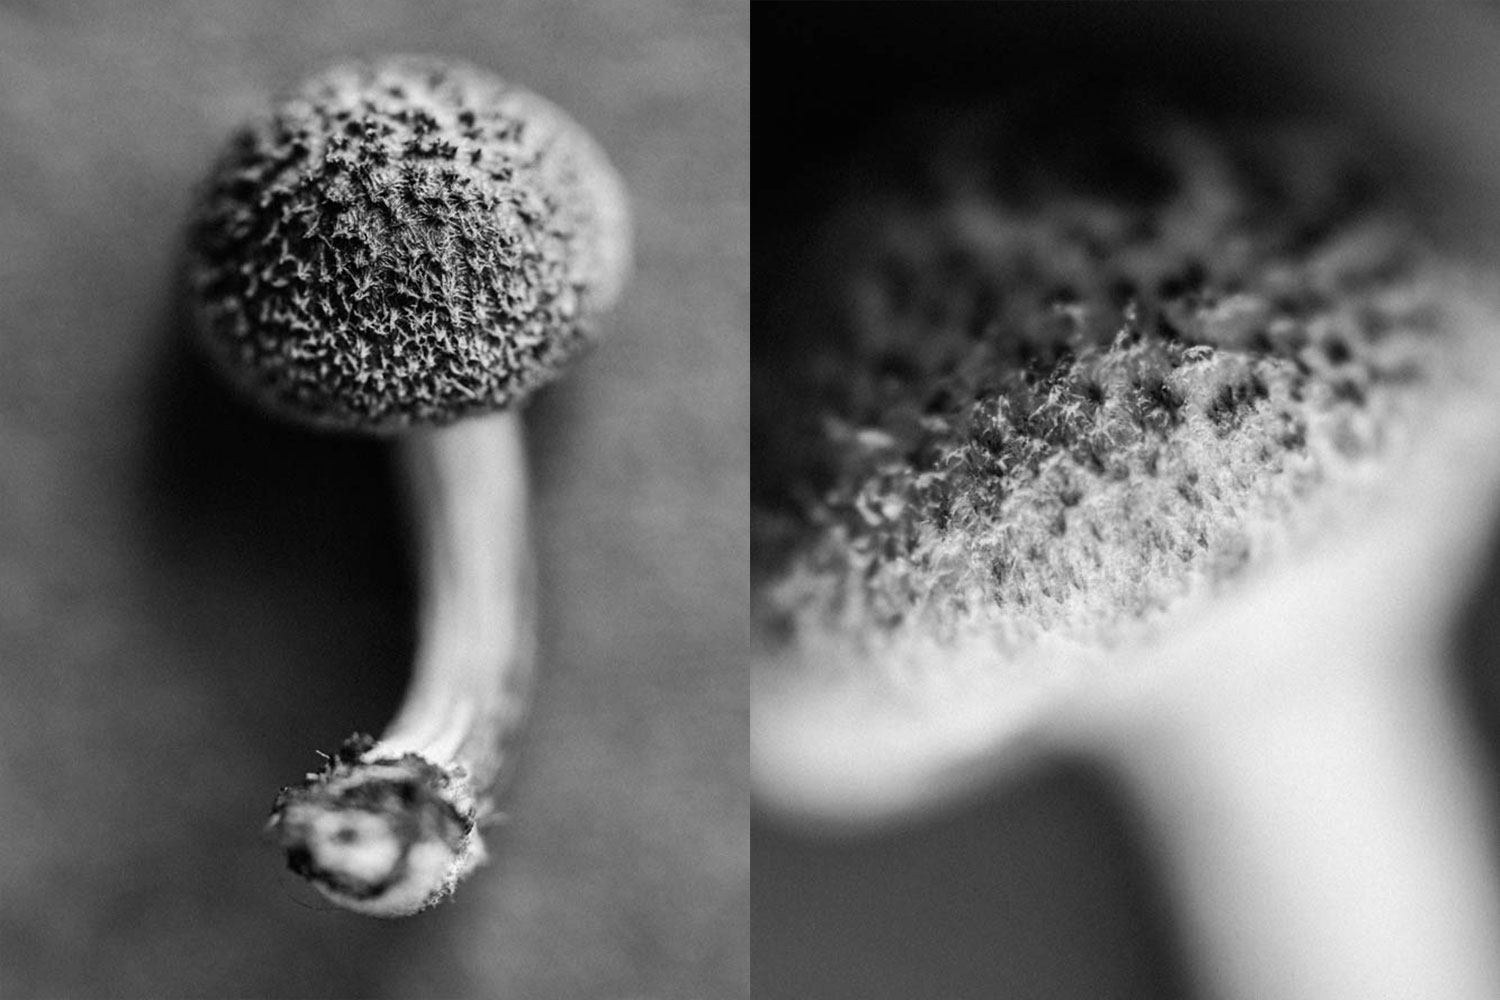 Harvested wild mushroom black and white photo.